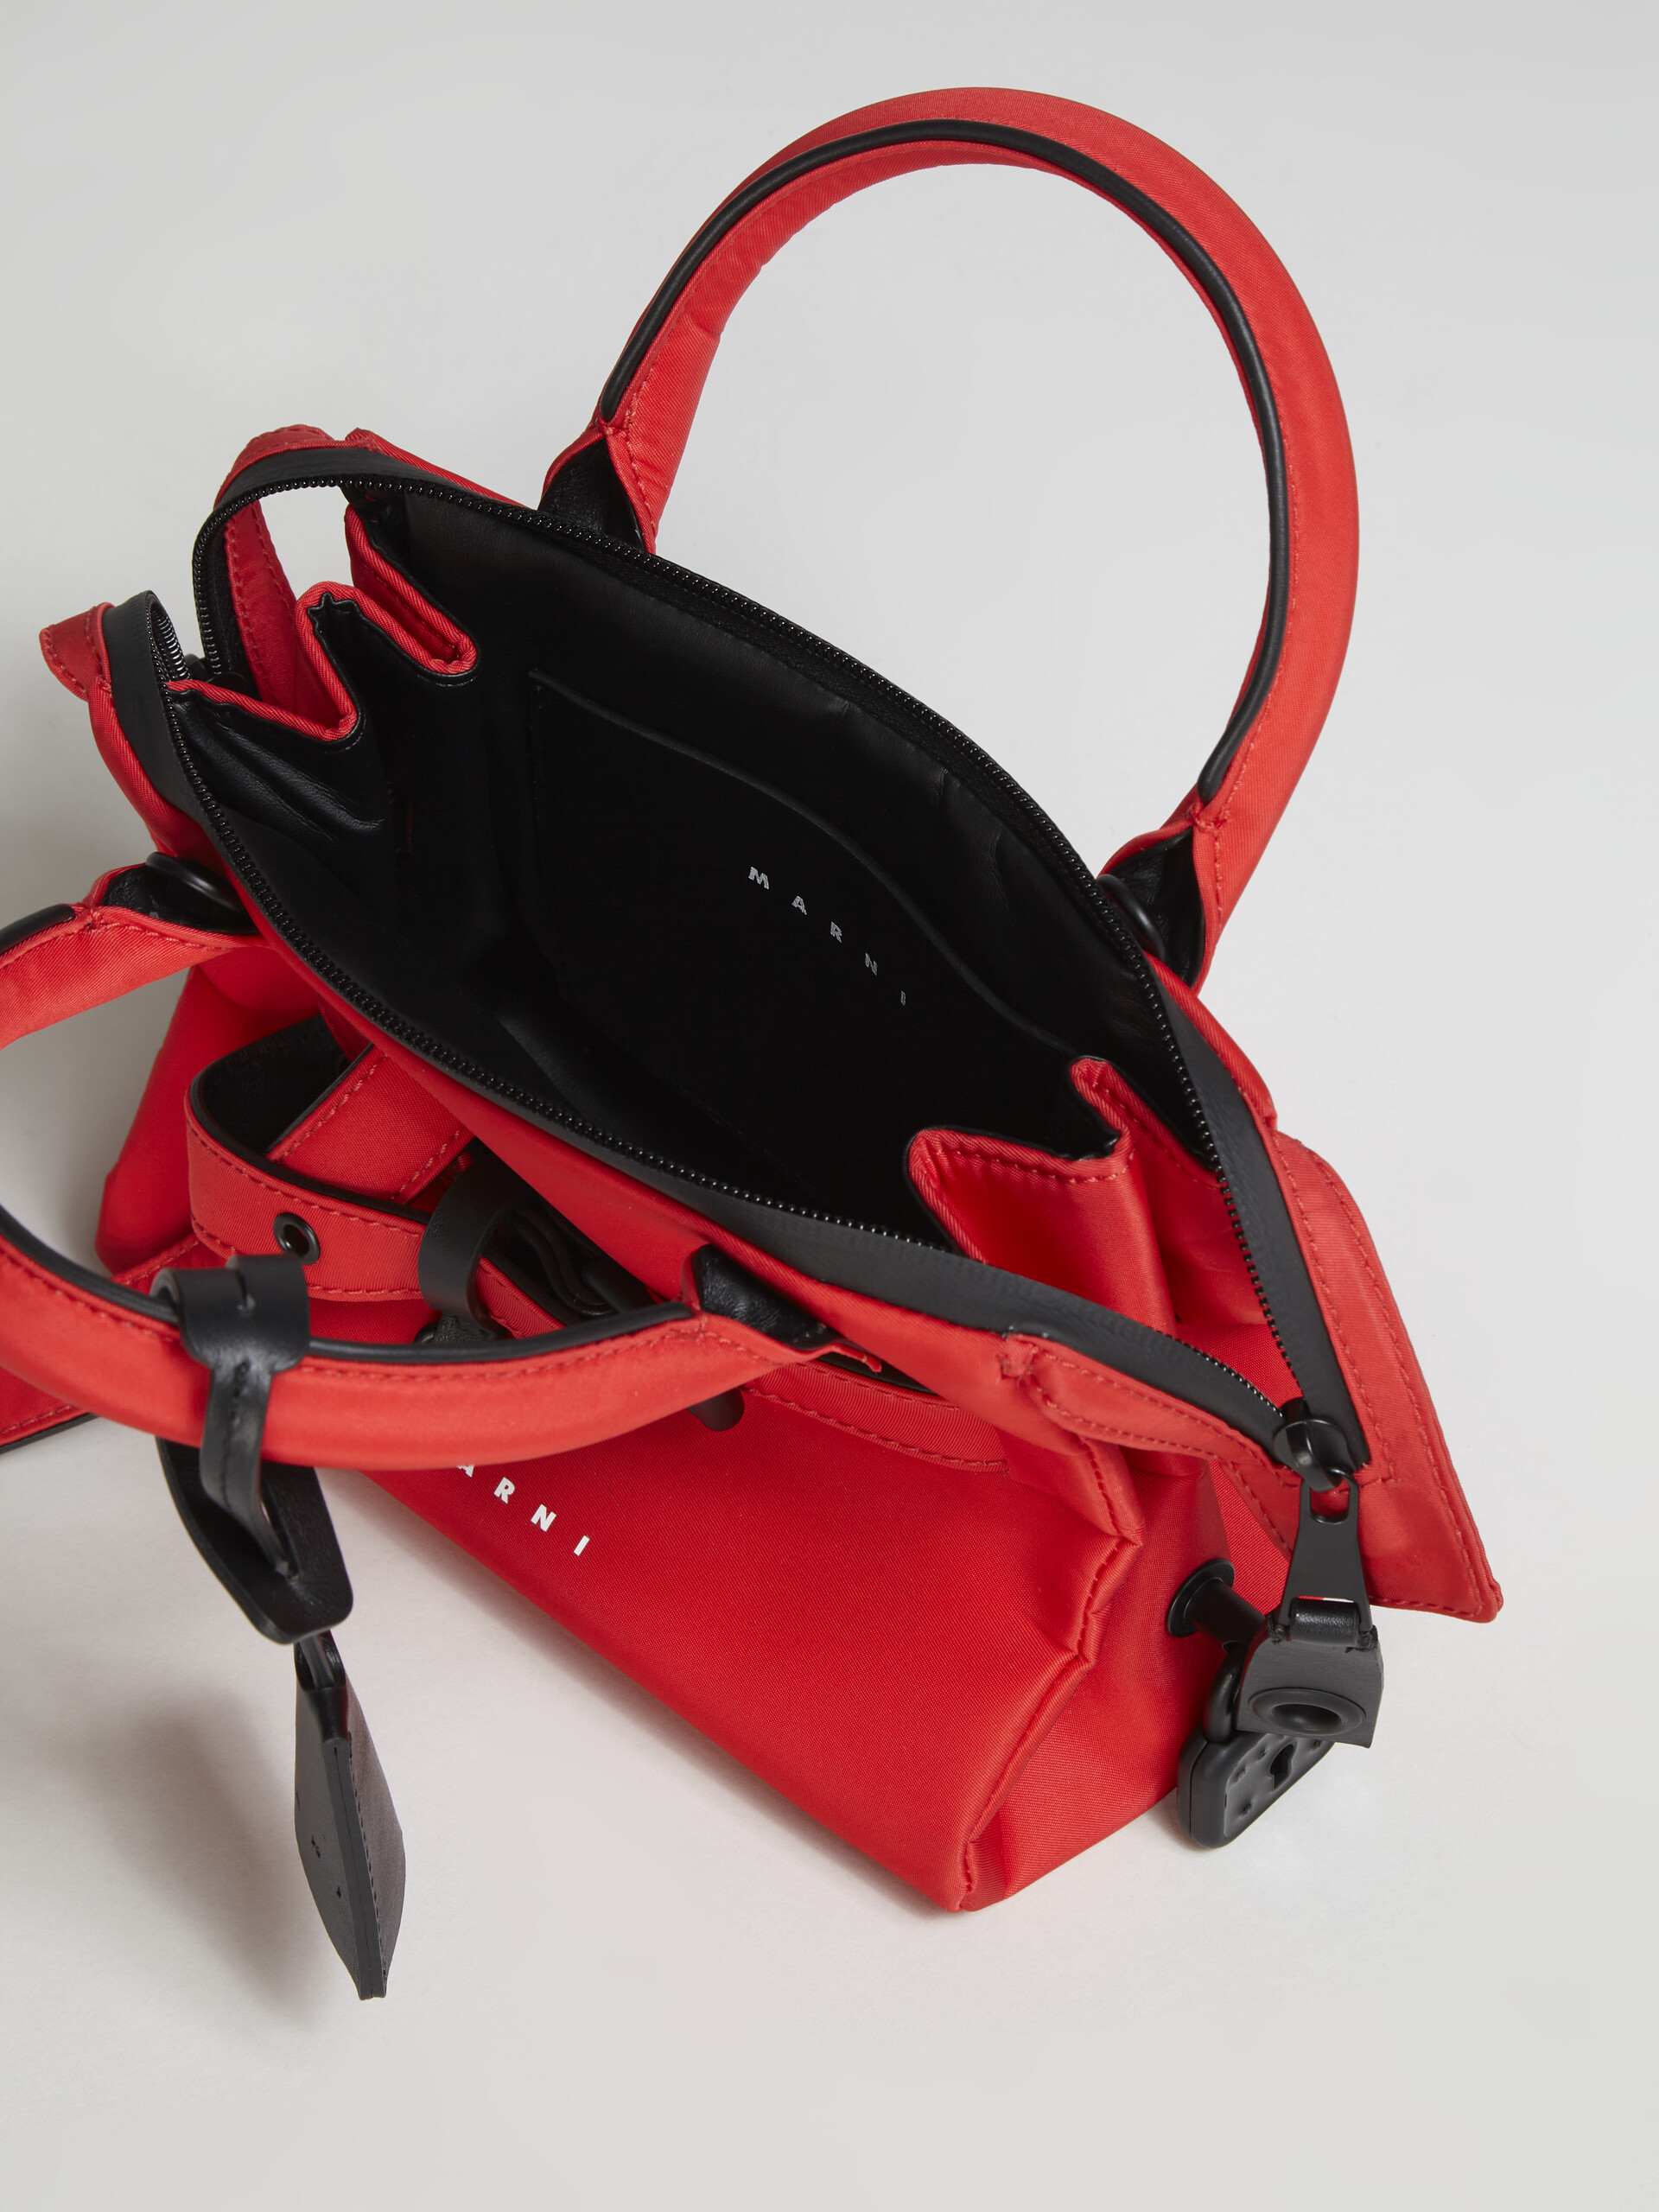 Red nylon TREASURE bag - Handbags - Image 4